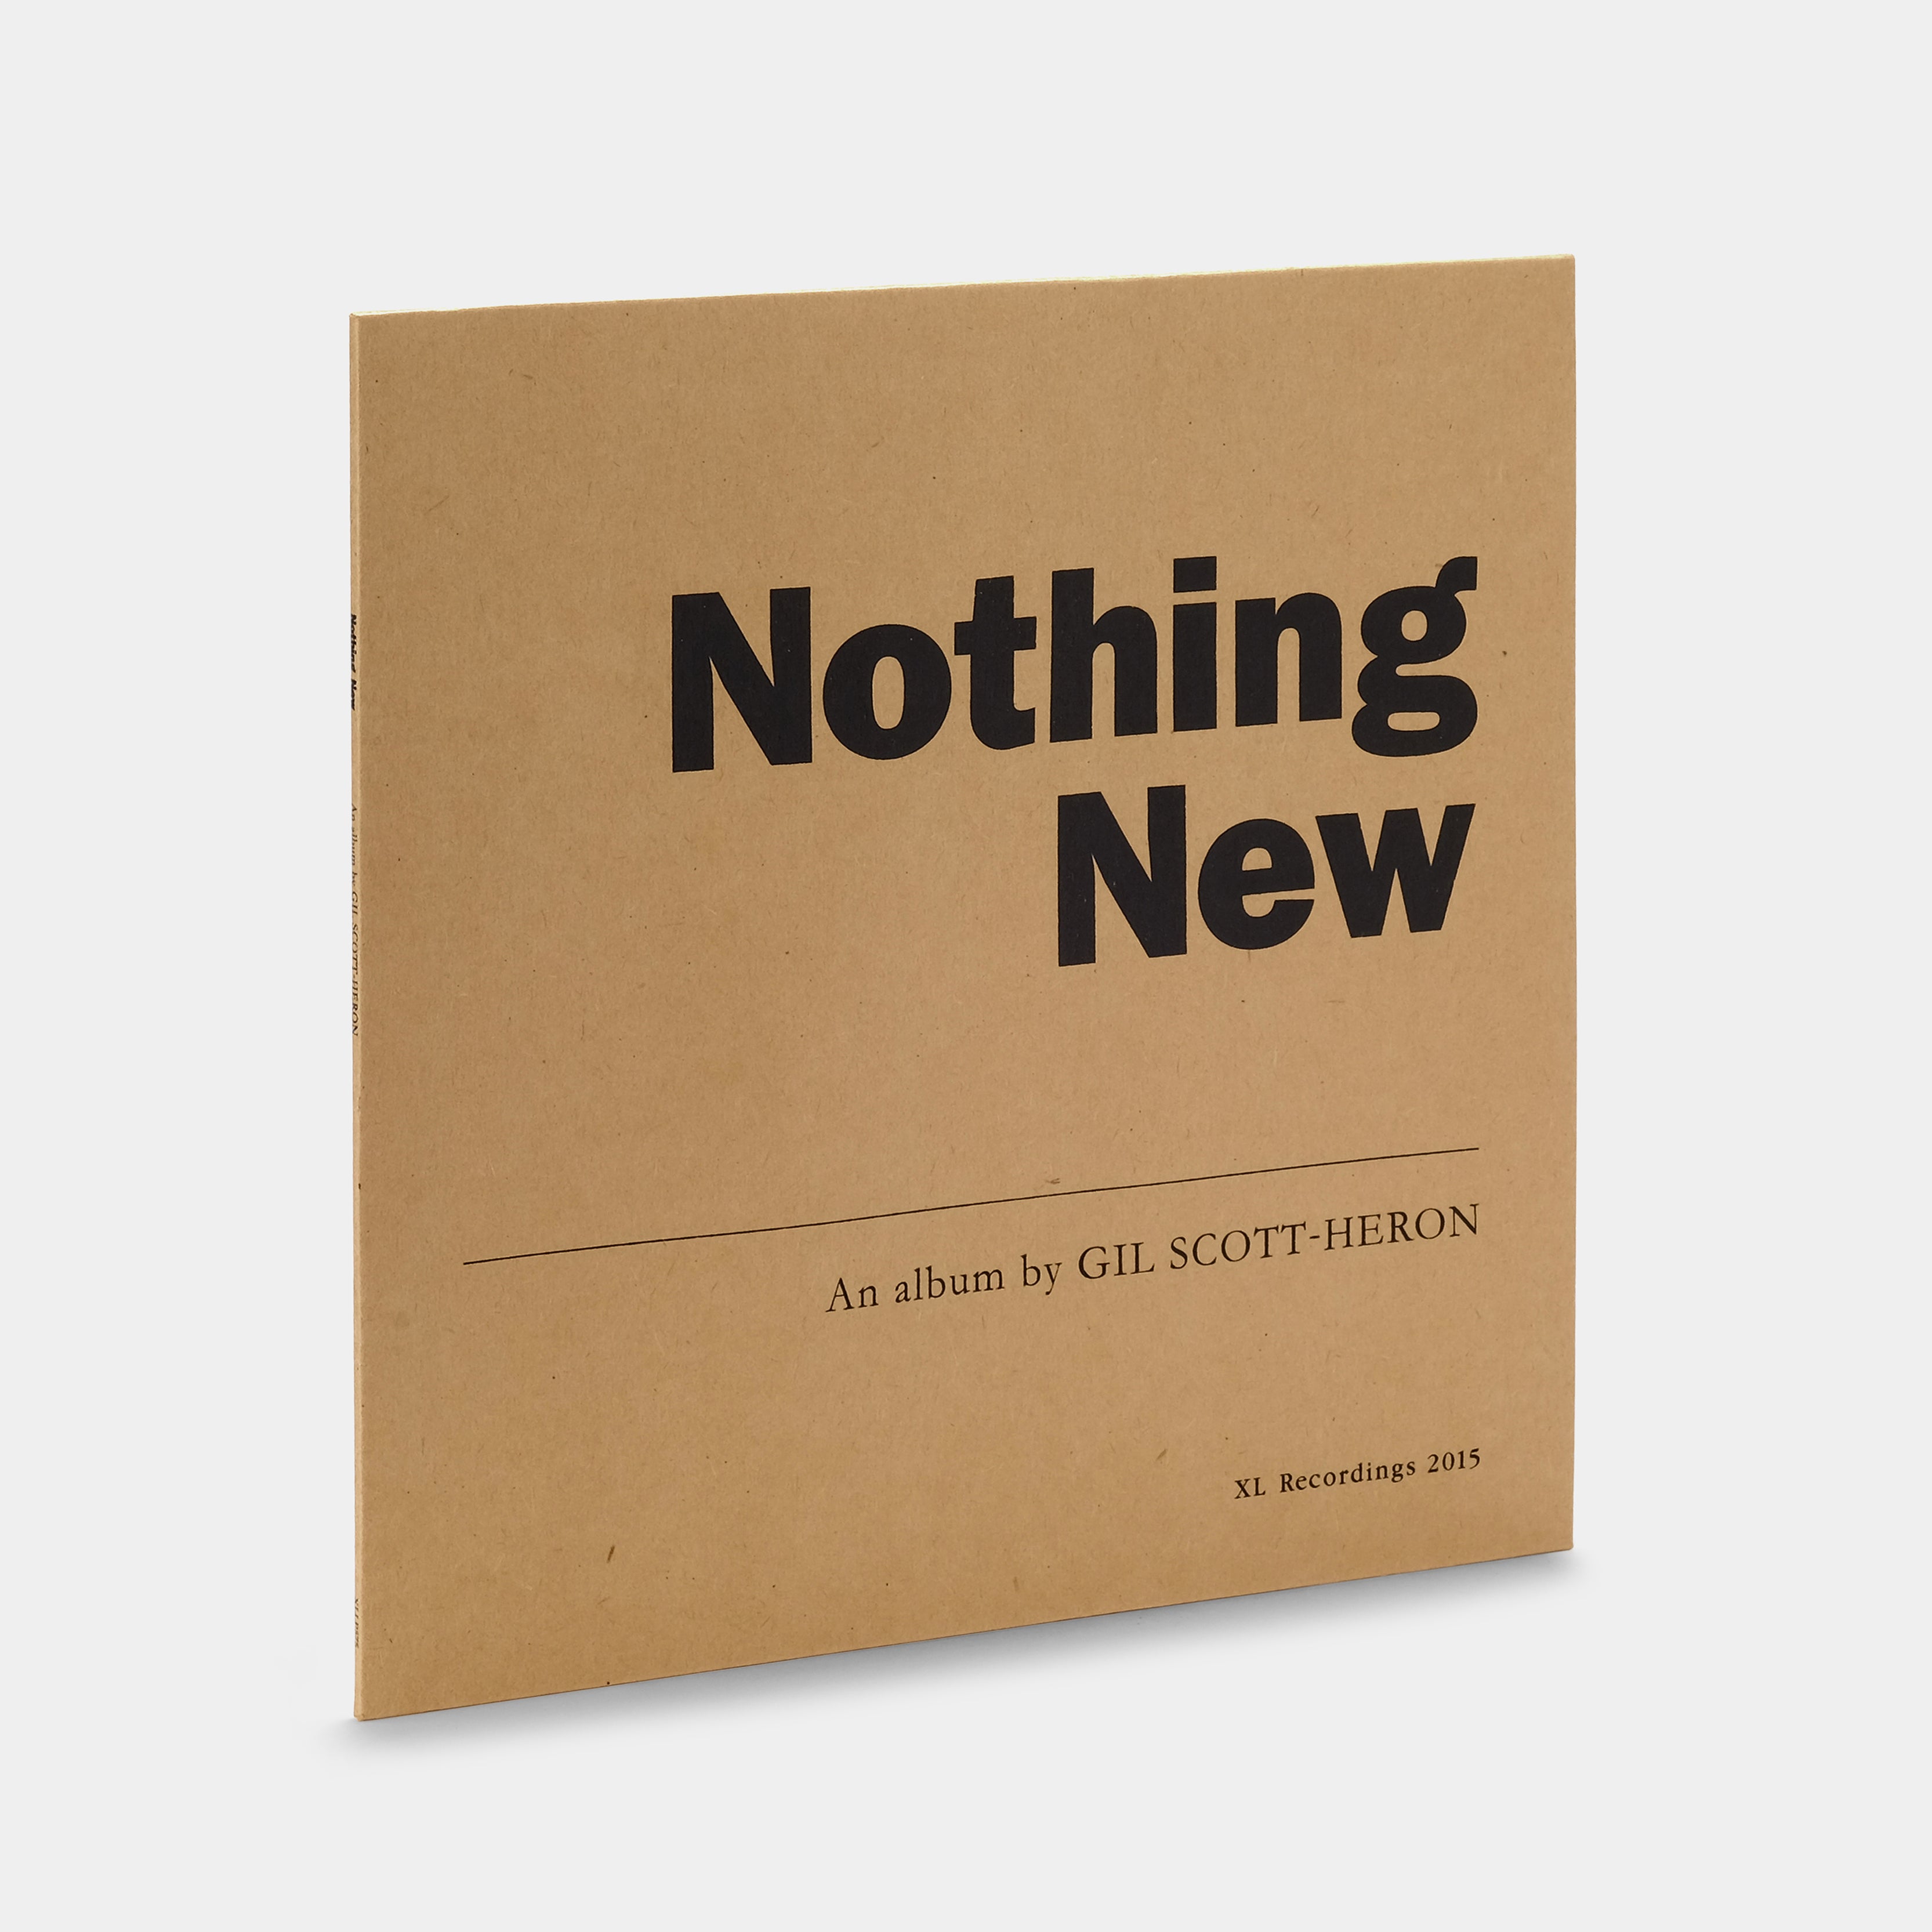 Gil Scott-Heron - Nothing New LP Vinyl Record